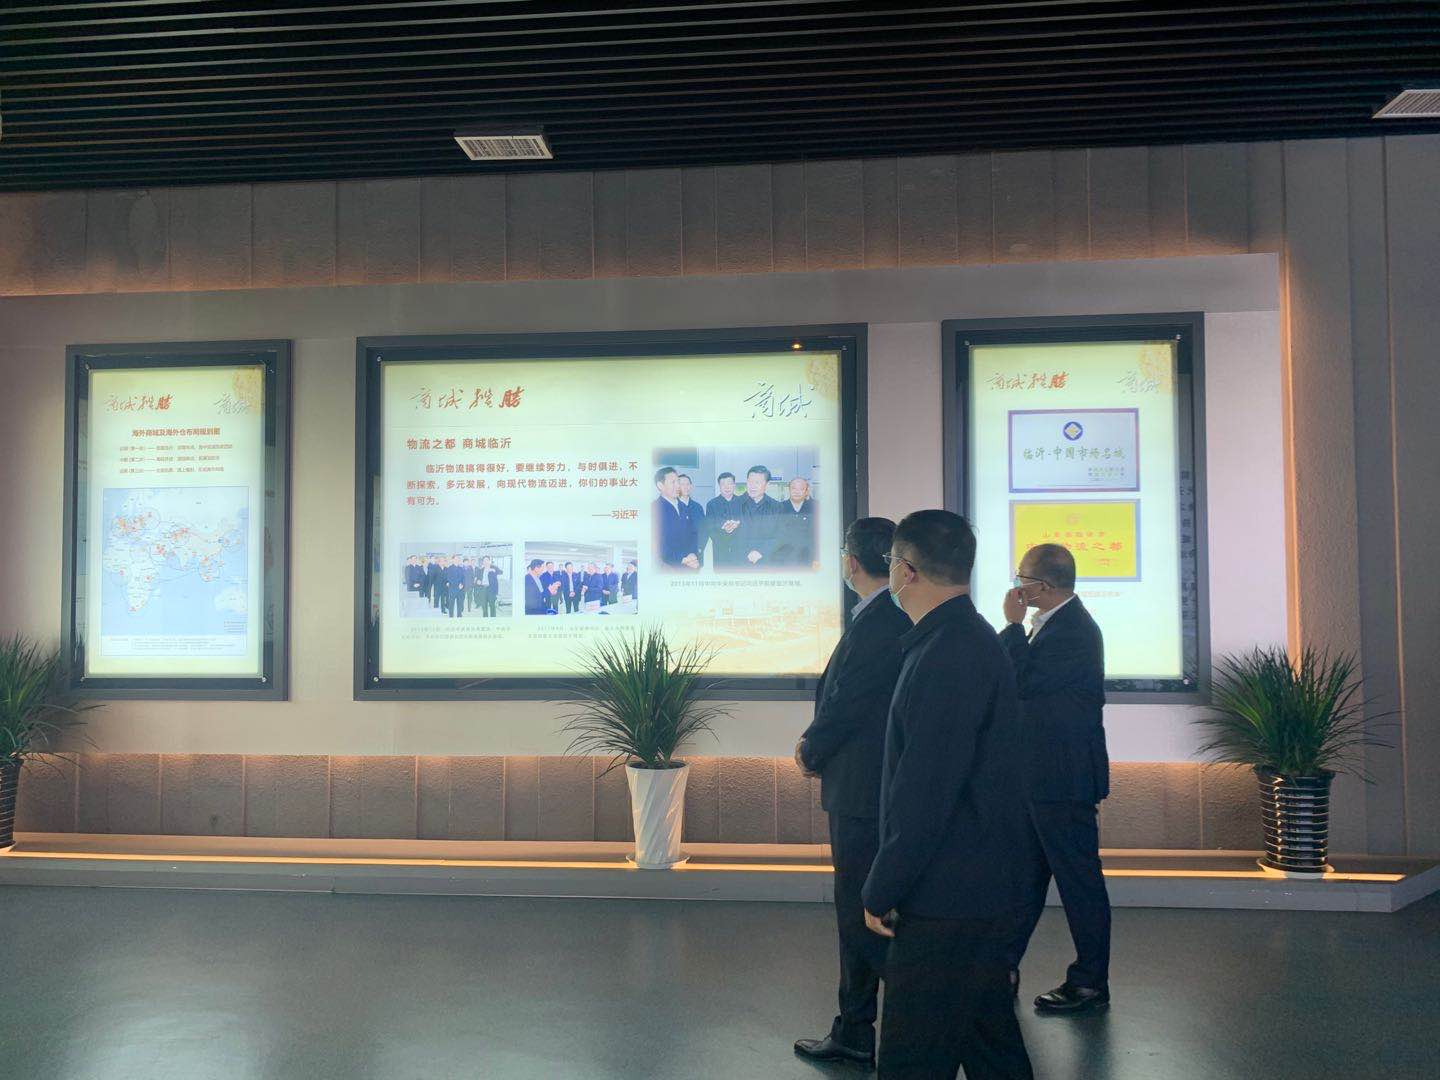 3M公司大中华区总裁徐继伟先生一行到访新明辉商城